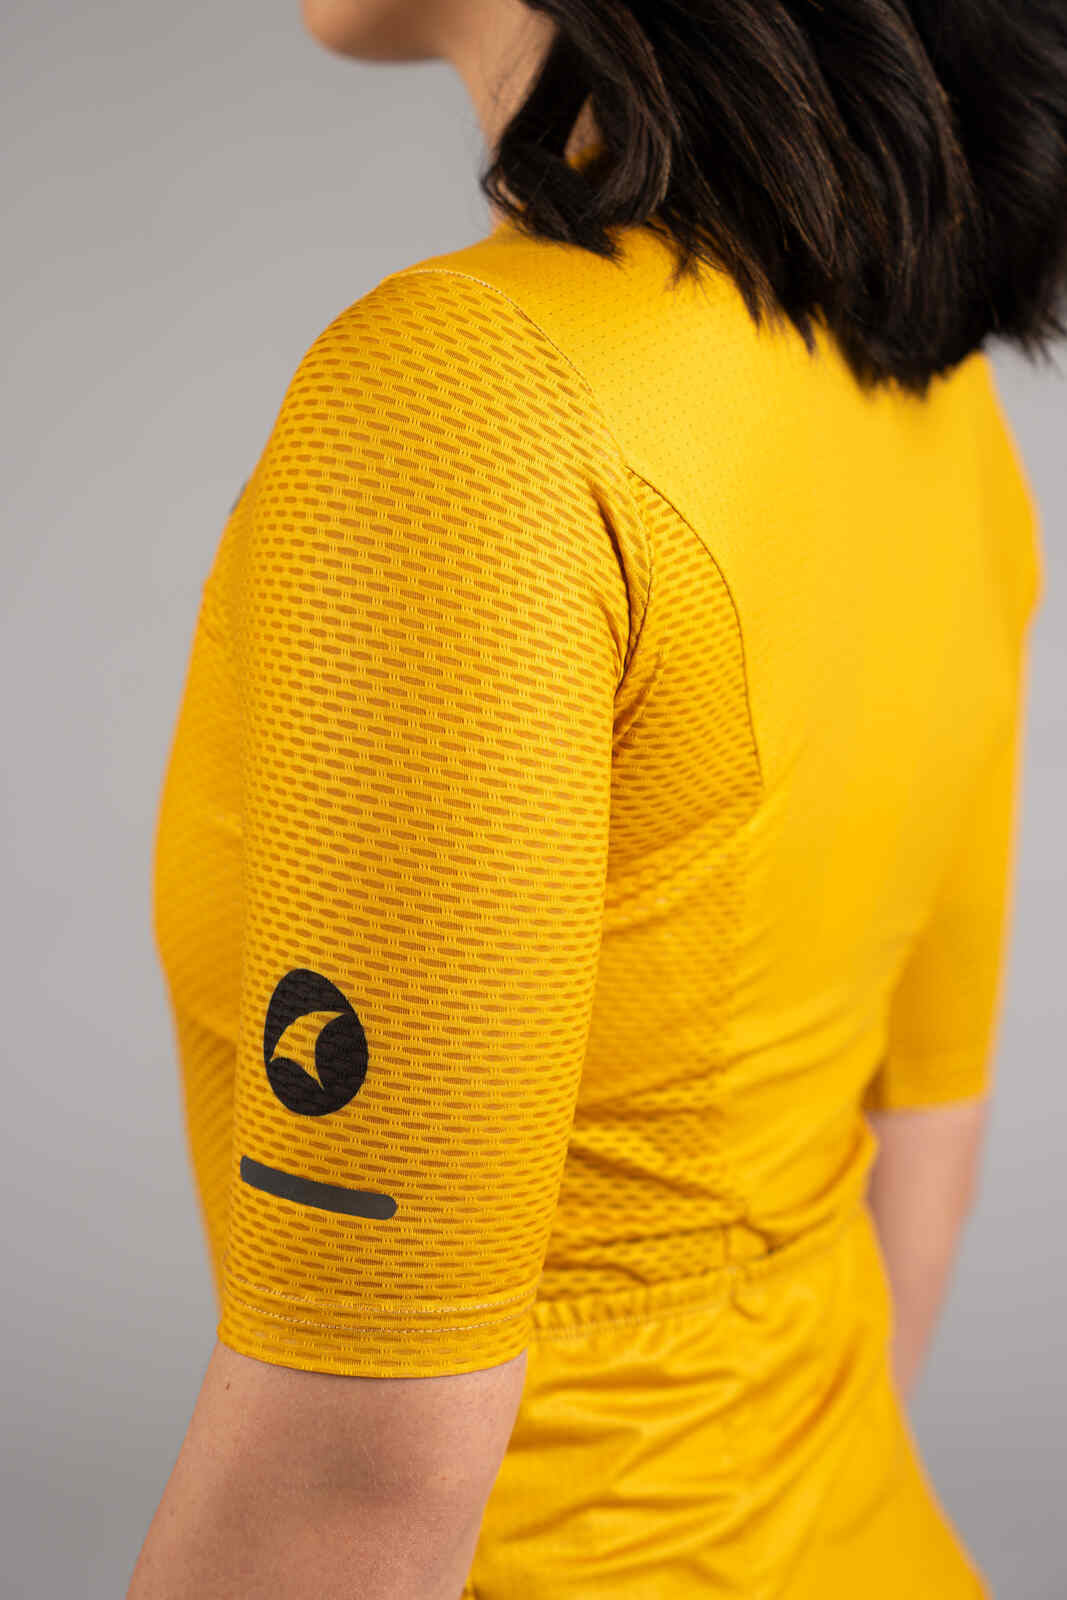 Women's Golden Yellow Mesh Cycling Jersey - Sleeve Fabric Close-Up